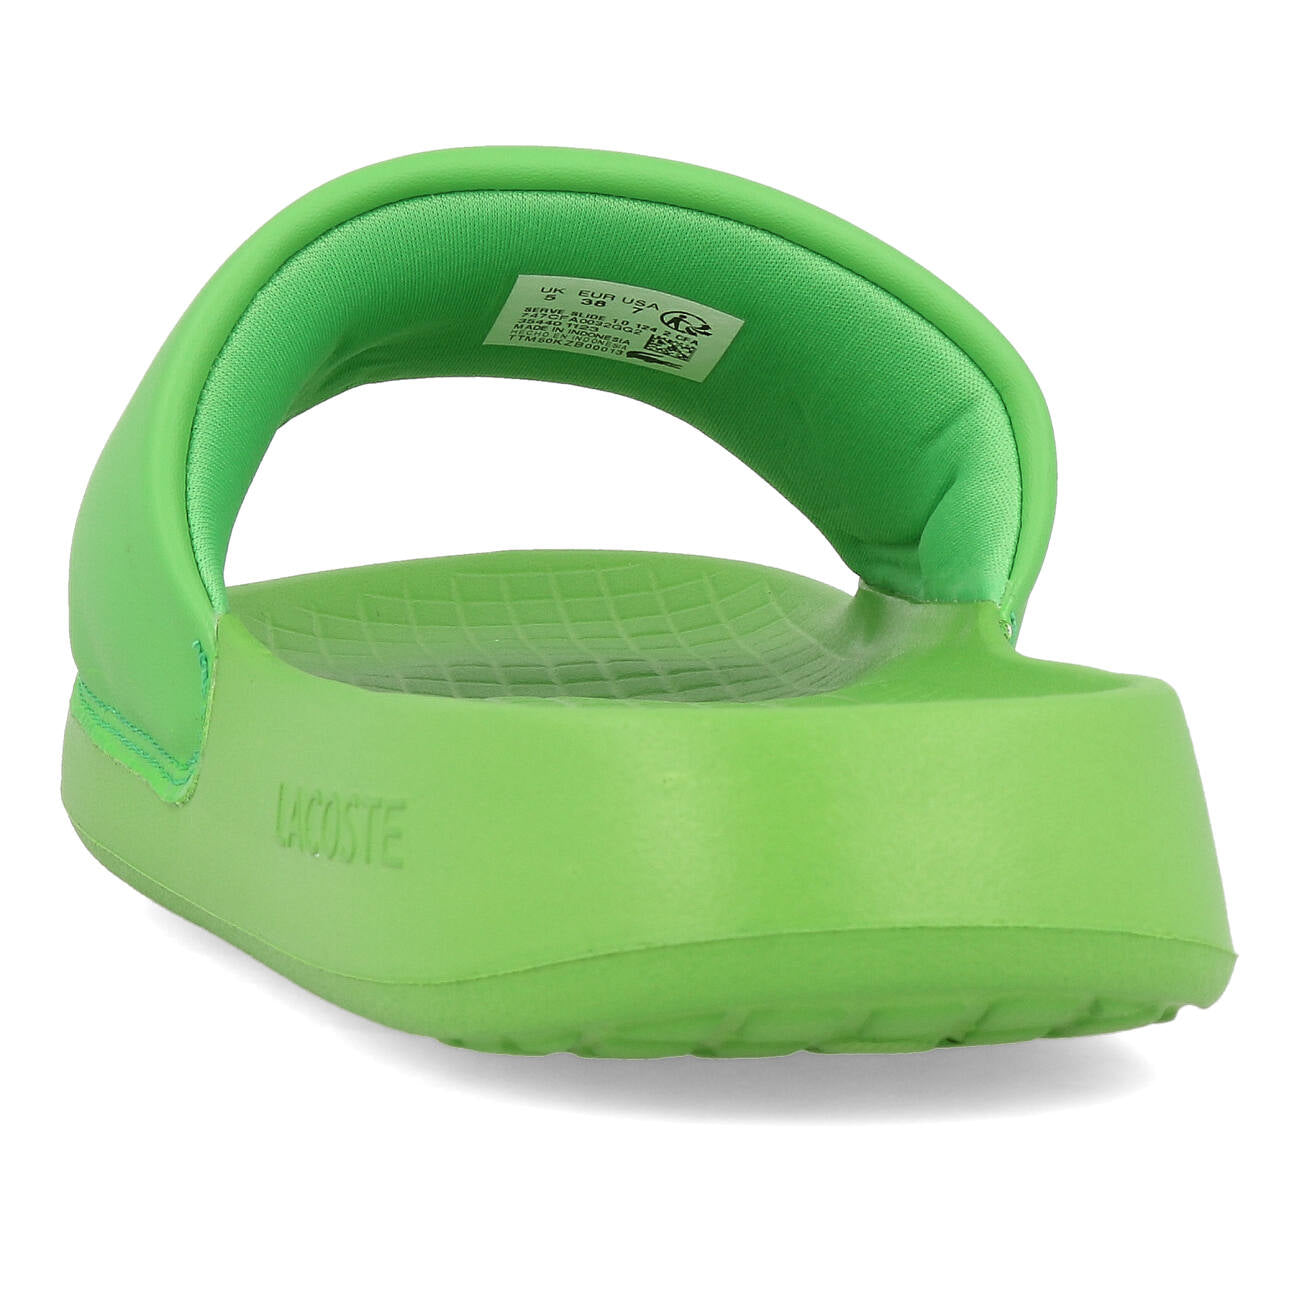 Lacoste Serve Slide 1.0 124 2 CFA Damen Green Green